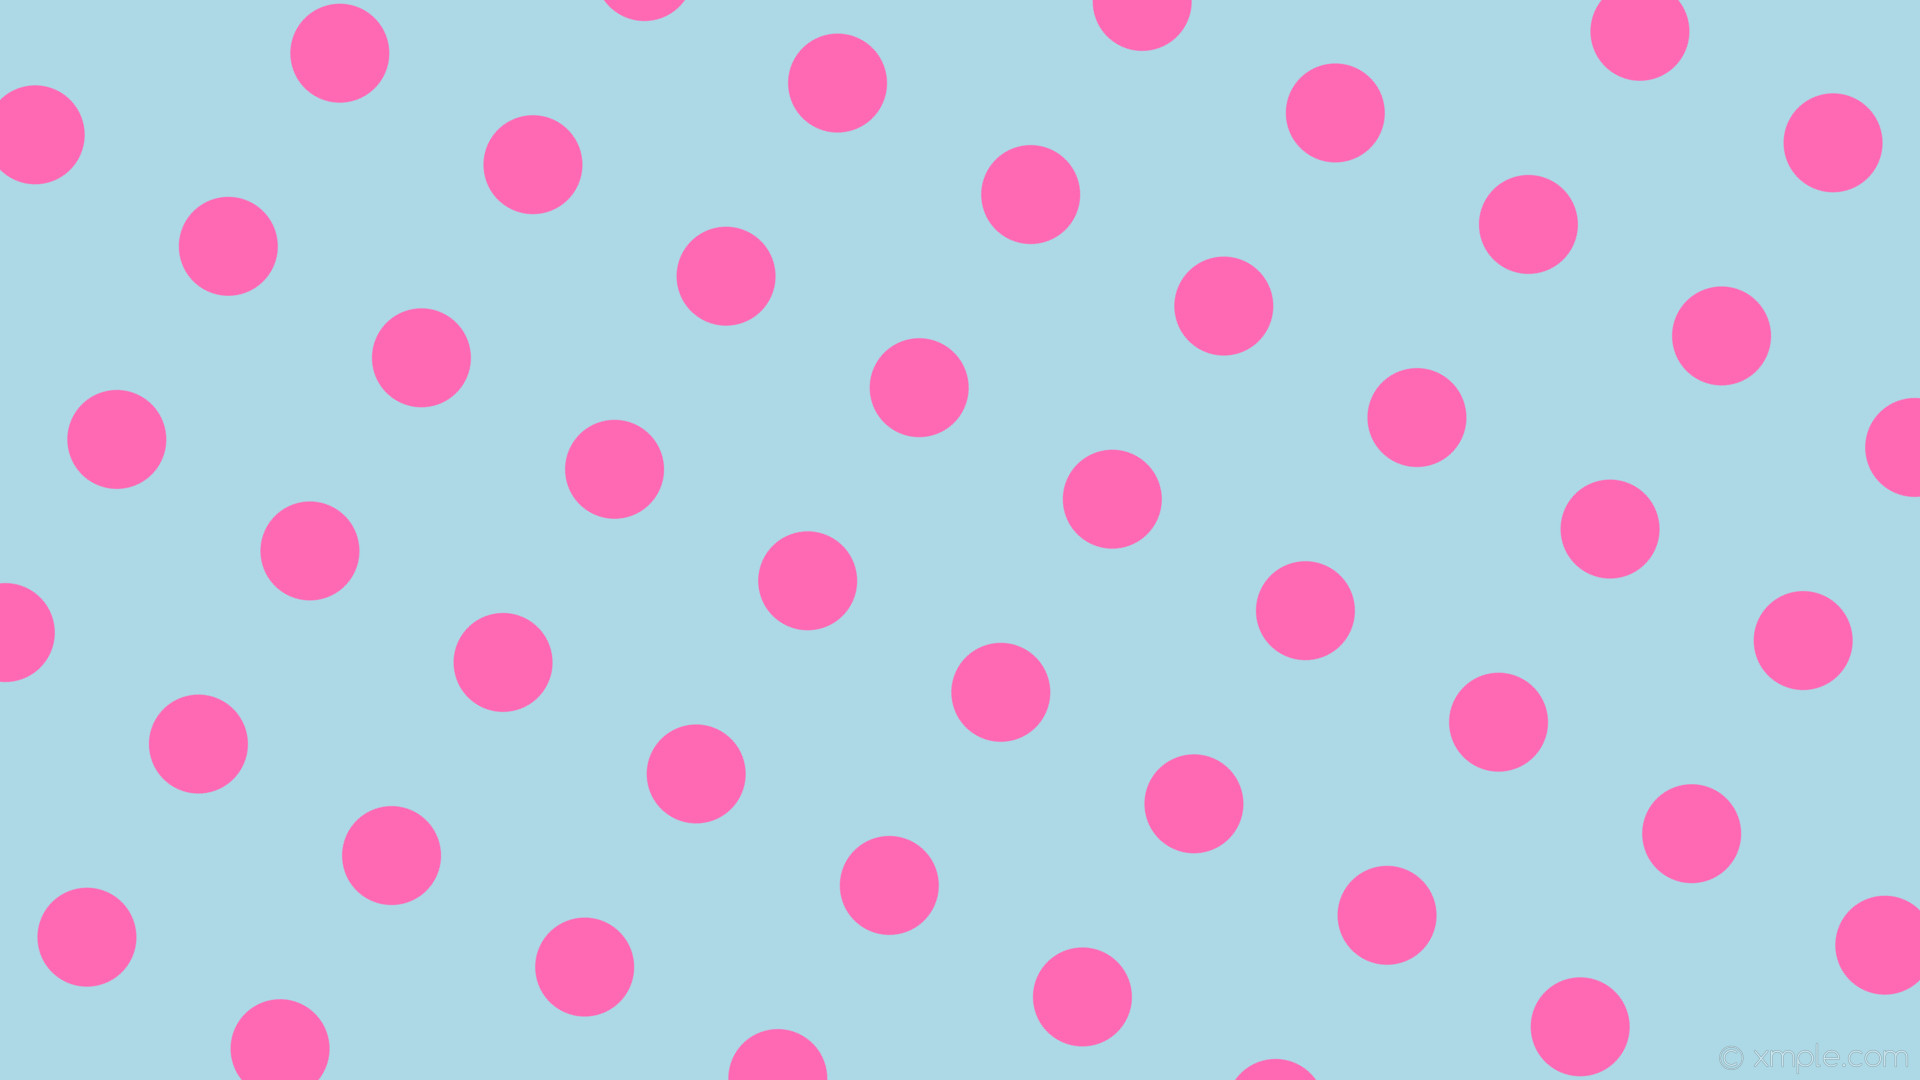 1920x1080 wallpaper pink blue dots polka spots light blue hot pink #add8e6 #ff69b4  150Â°